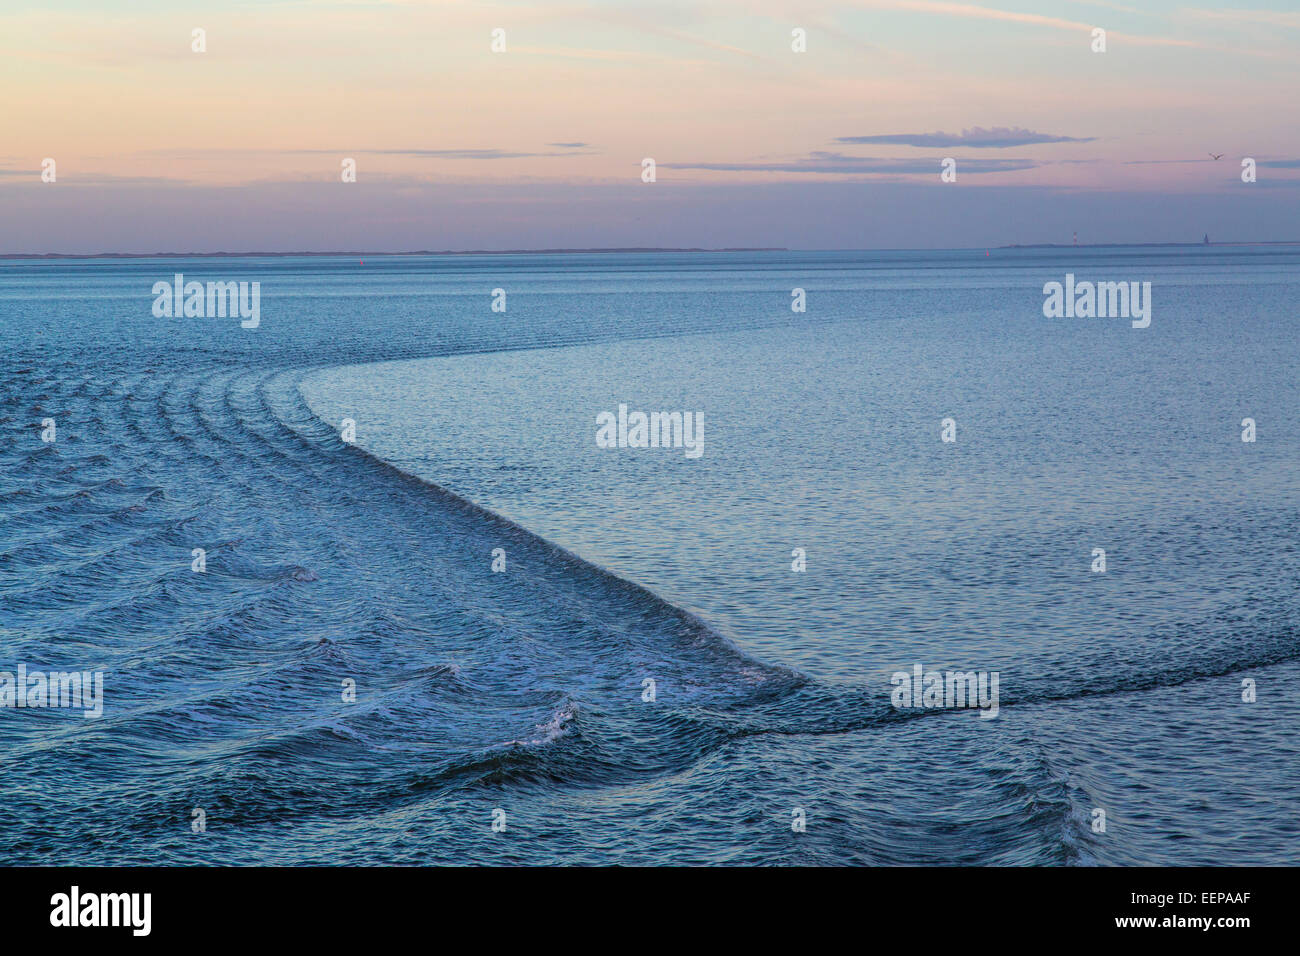 Wadden Sea, North Sea island Spiekeroog, ferry pulls a slight wave on the calm sea, at high tide Stock Photo